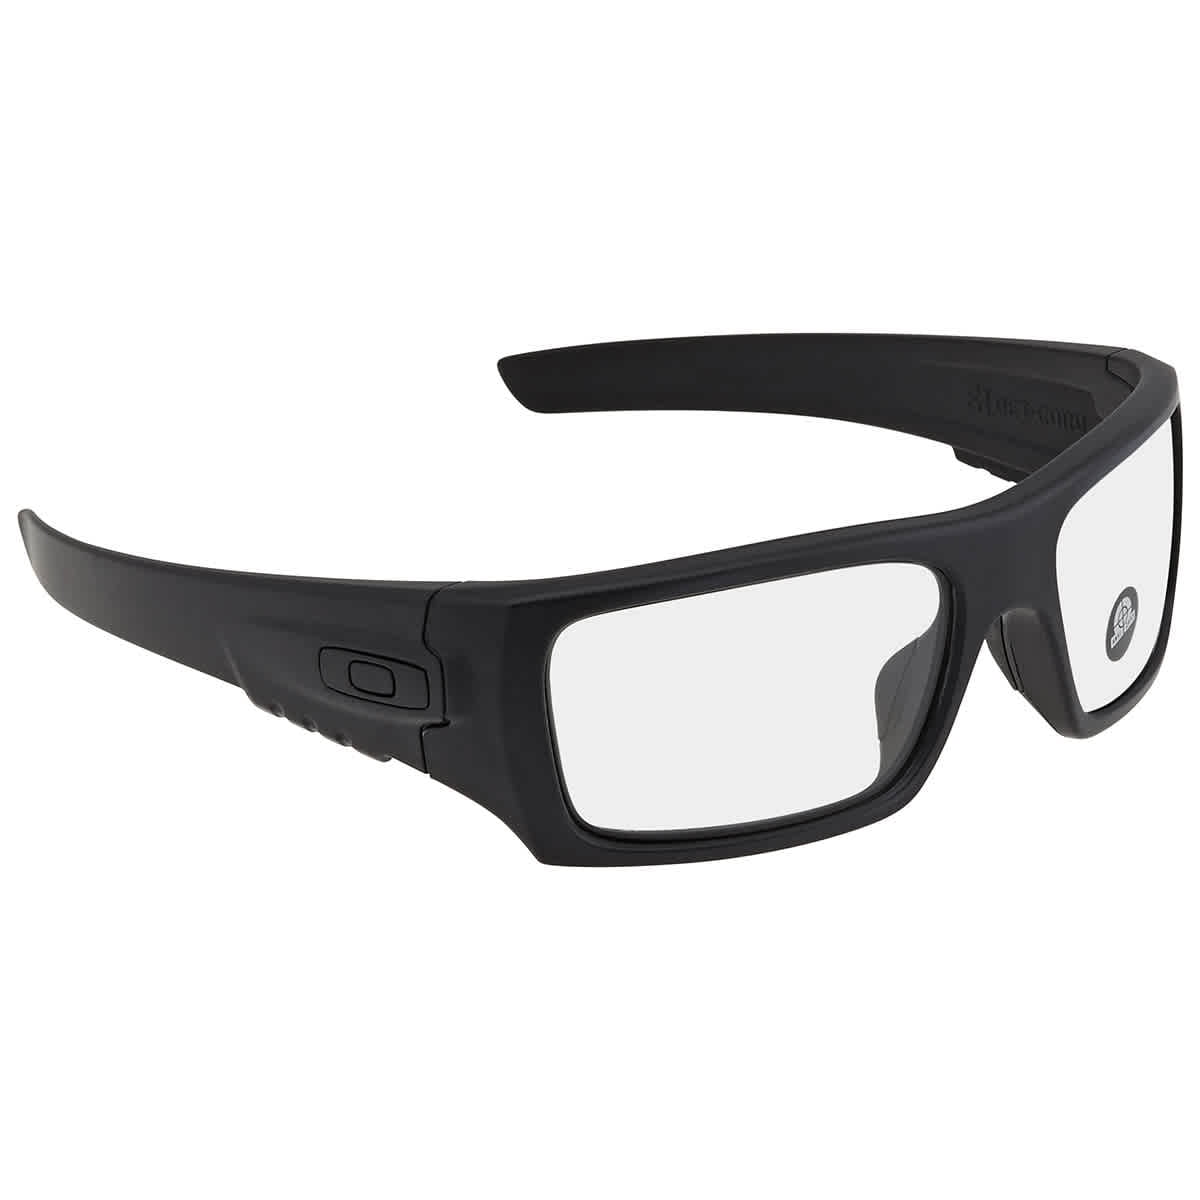 Oakley SI Det Cord Sunglasses Black Frame with Grey Lens